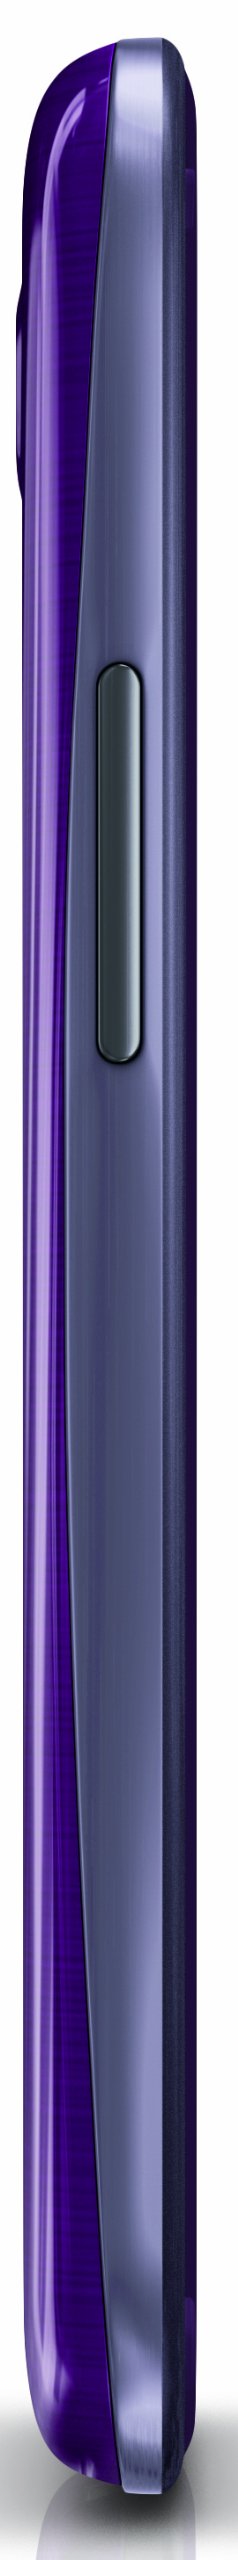 Samsung Galaxy S III, Purple 16GB (Sprint)